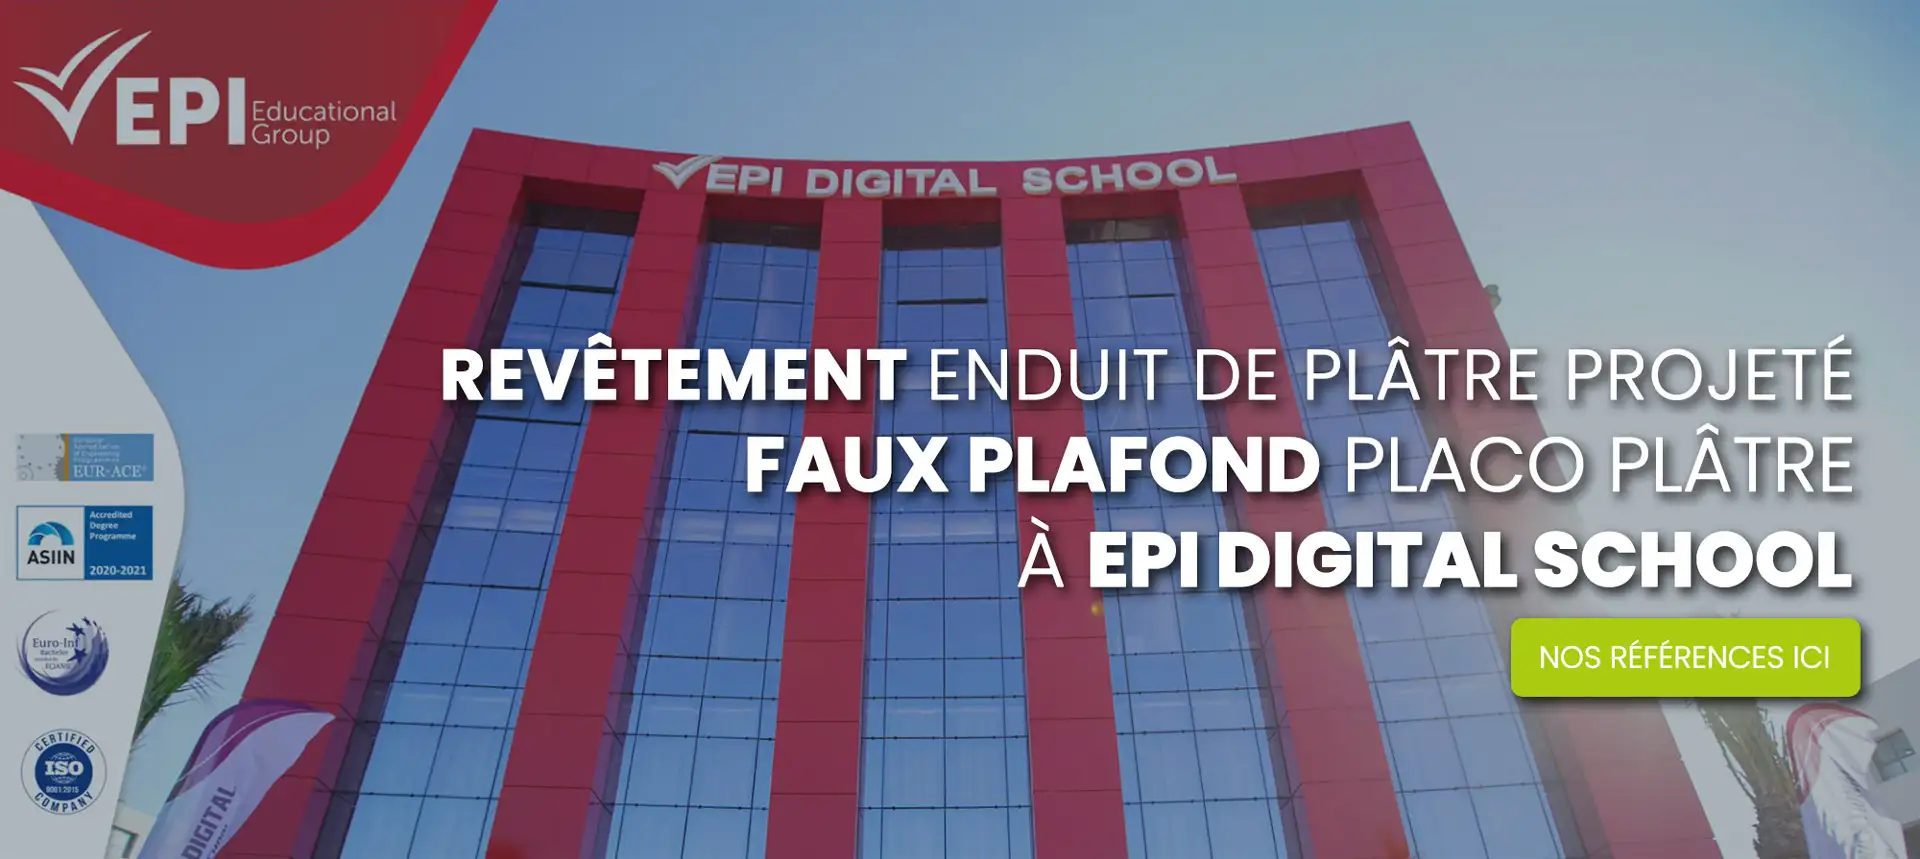 Epi Digital School Tunisie